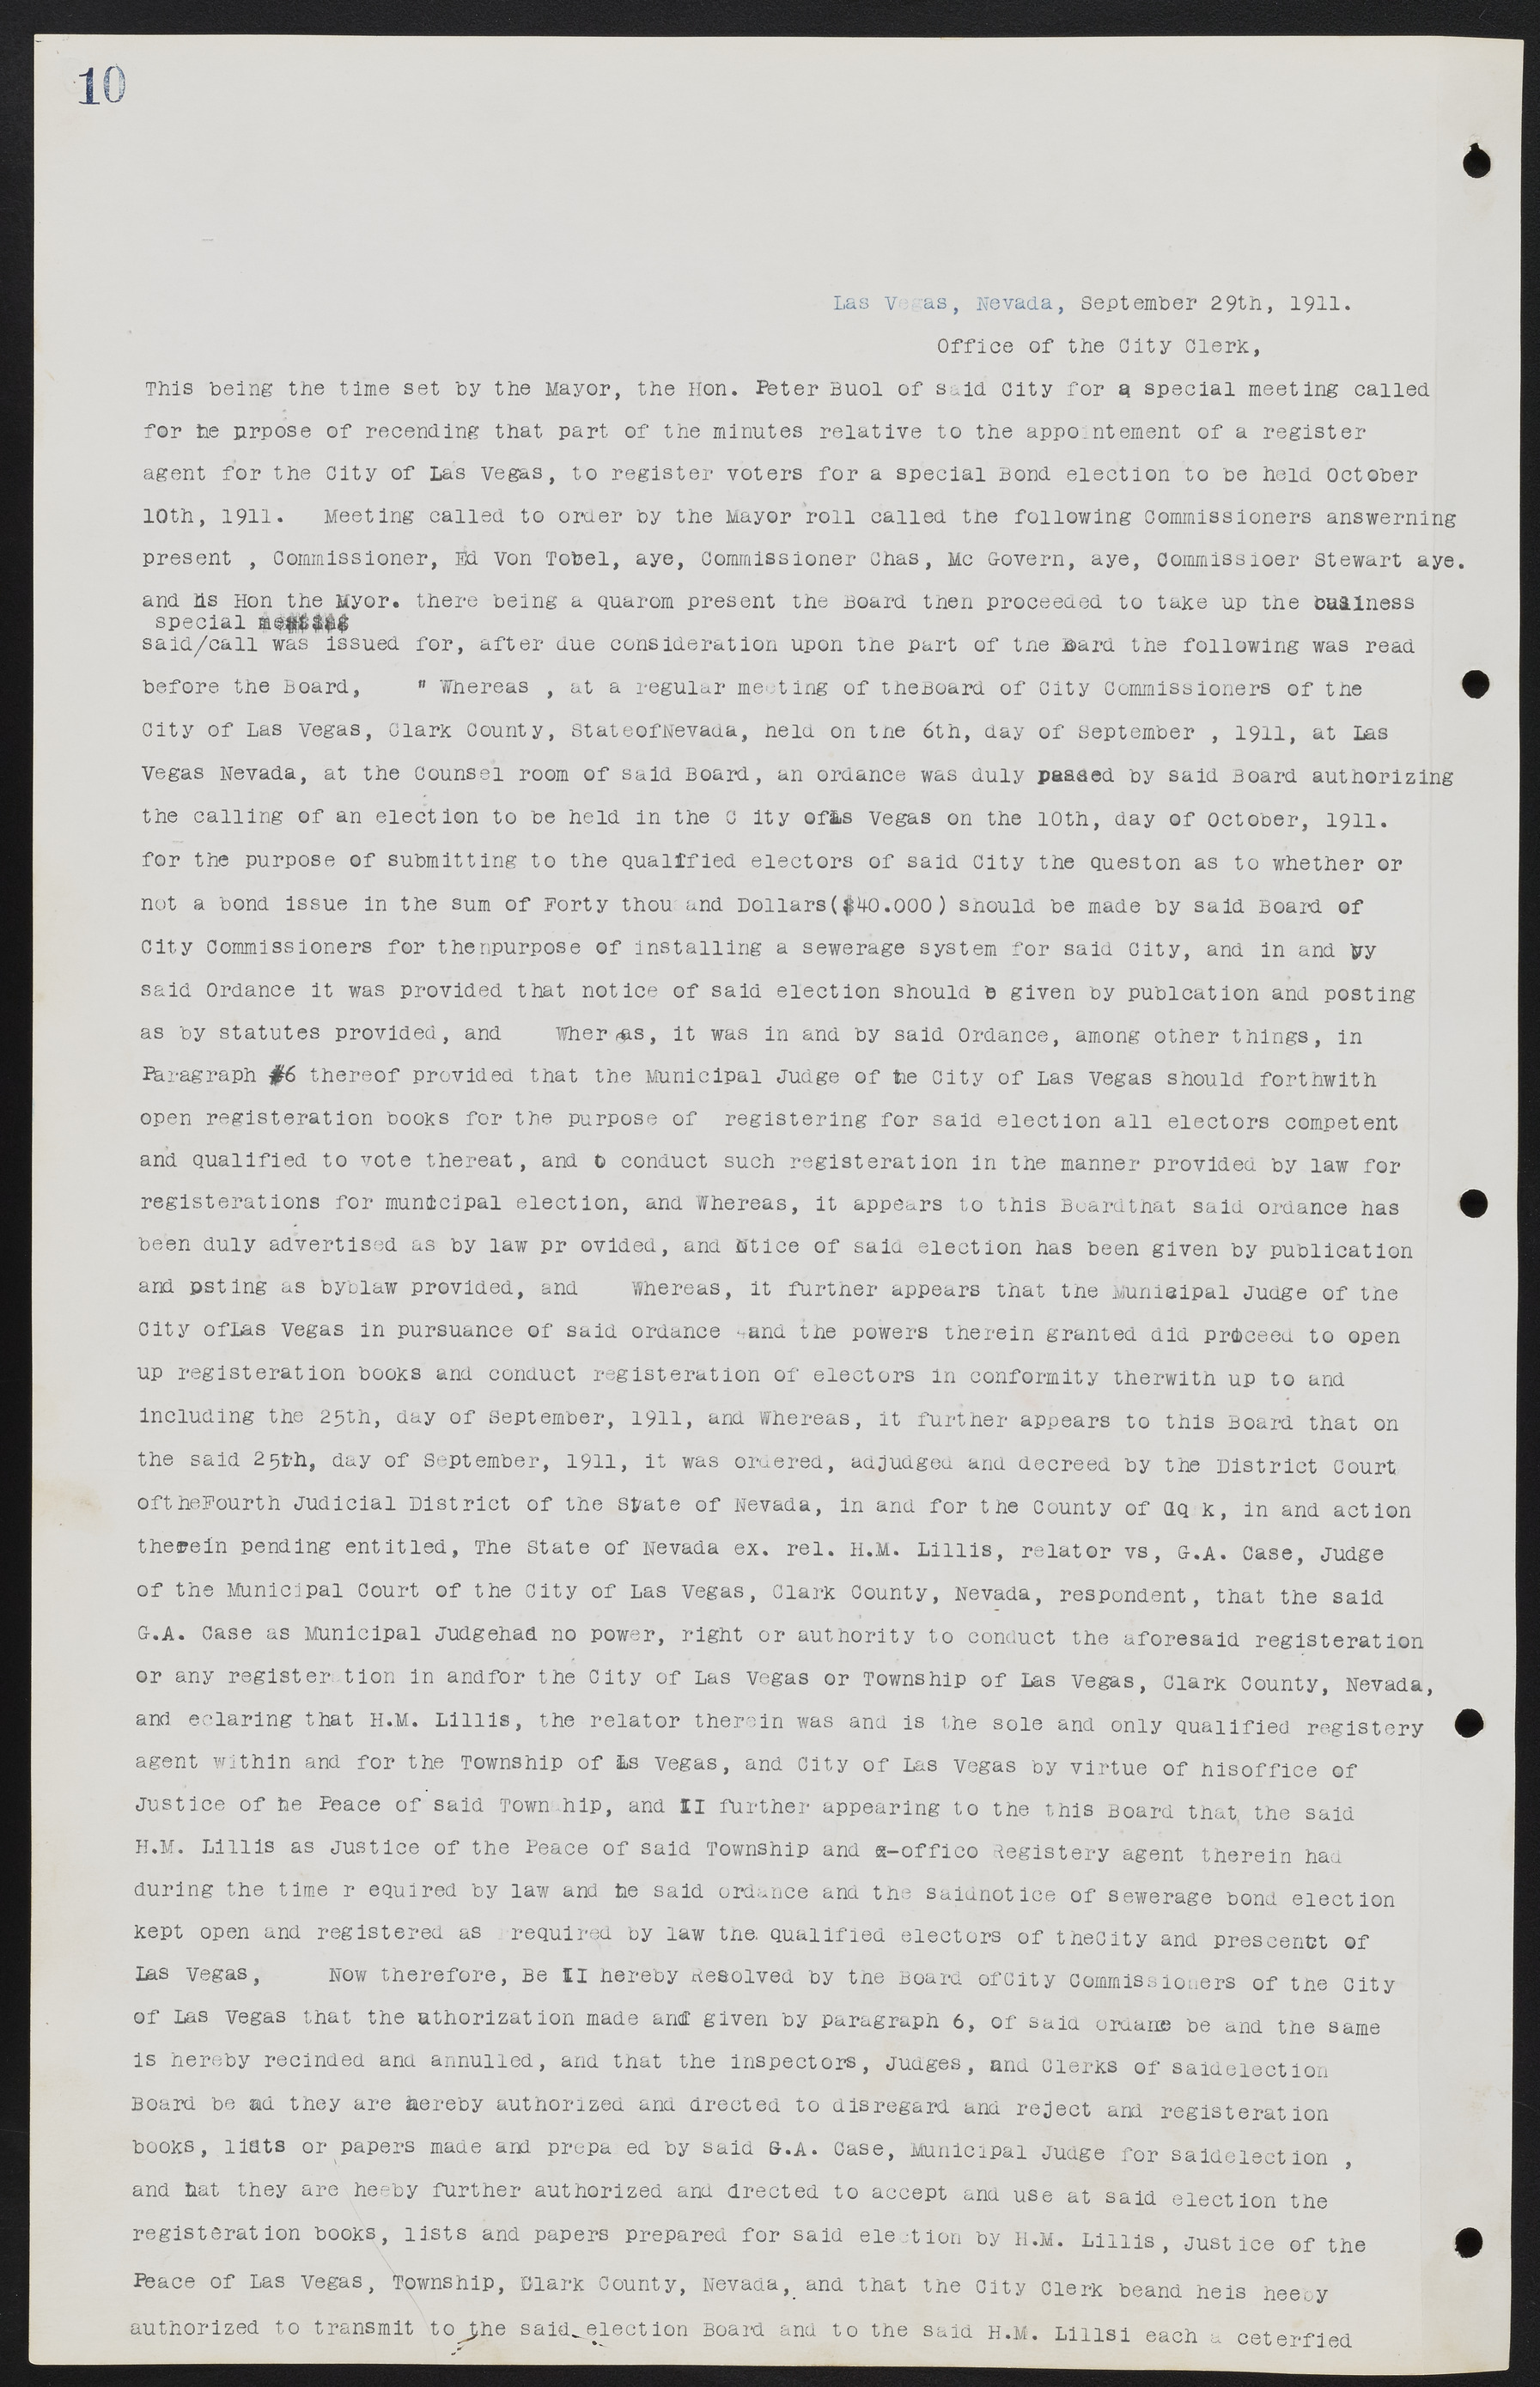 Las Vegas City Commission Minutes, June 22, 1911 to February 7, 1922, lvc000001-24